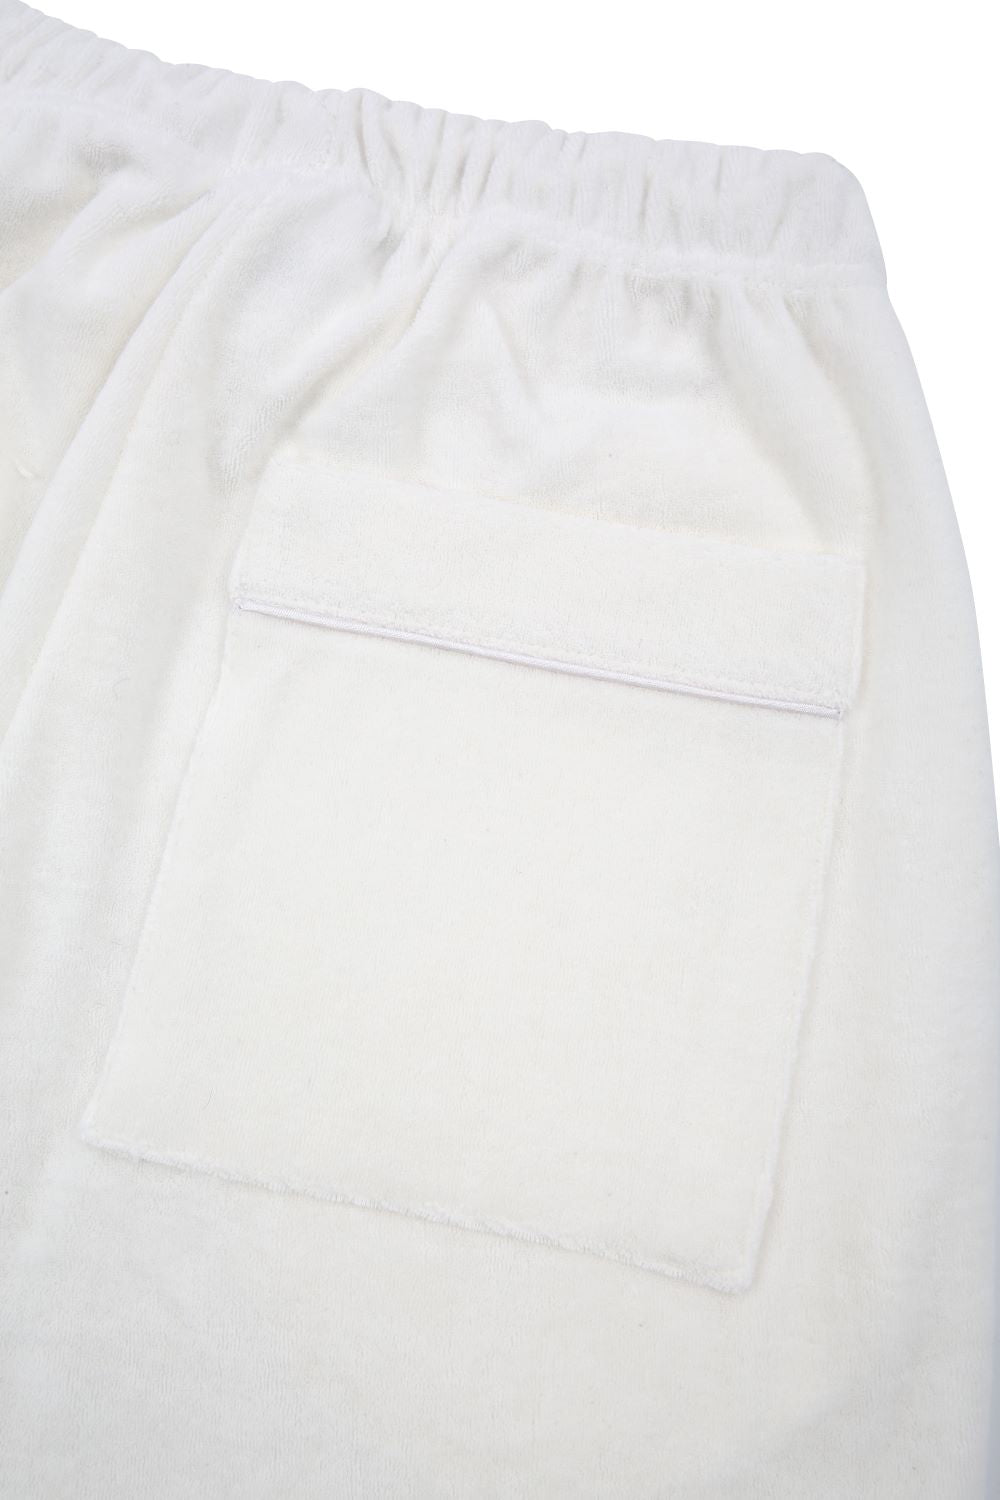 White towel pants